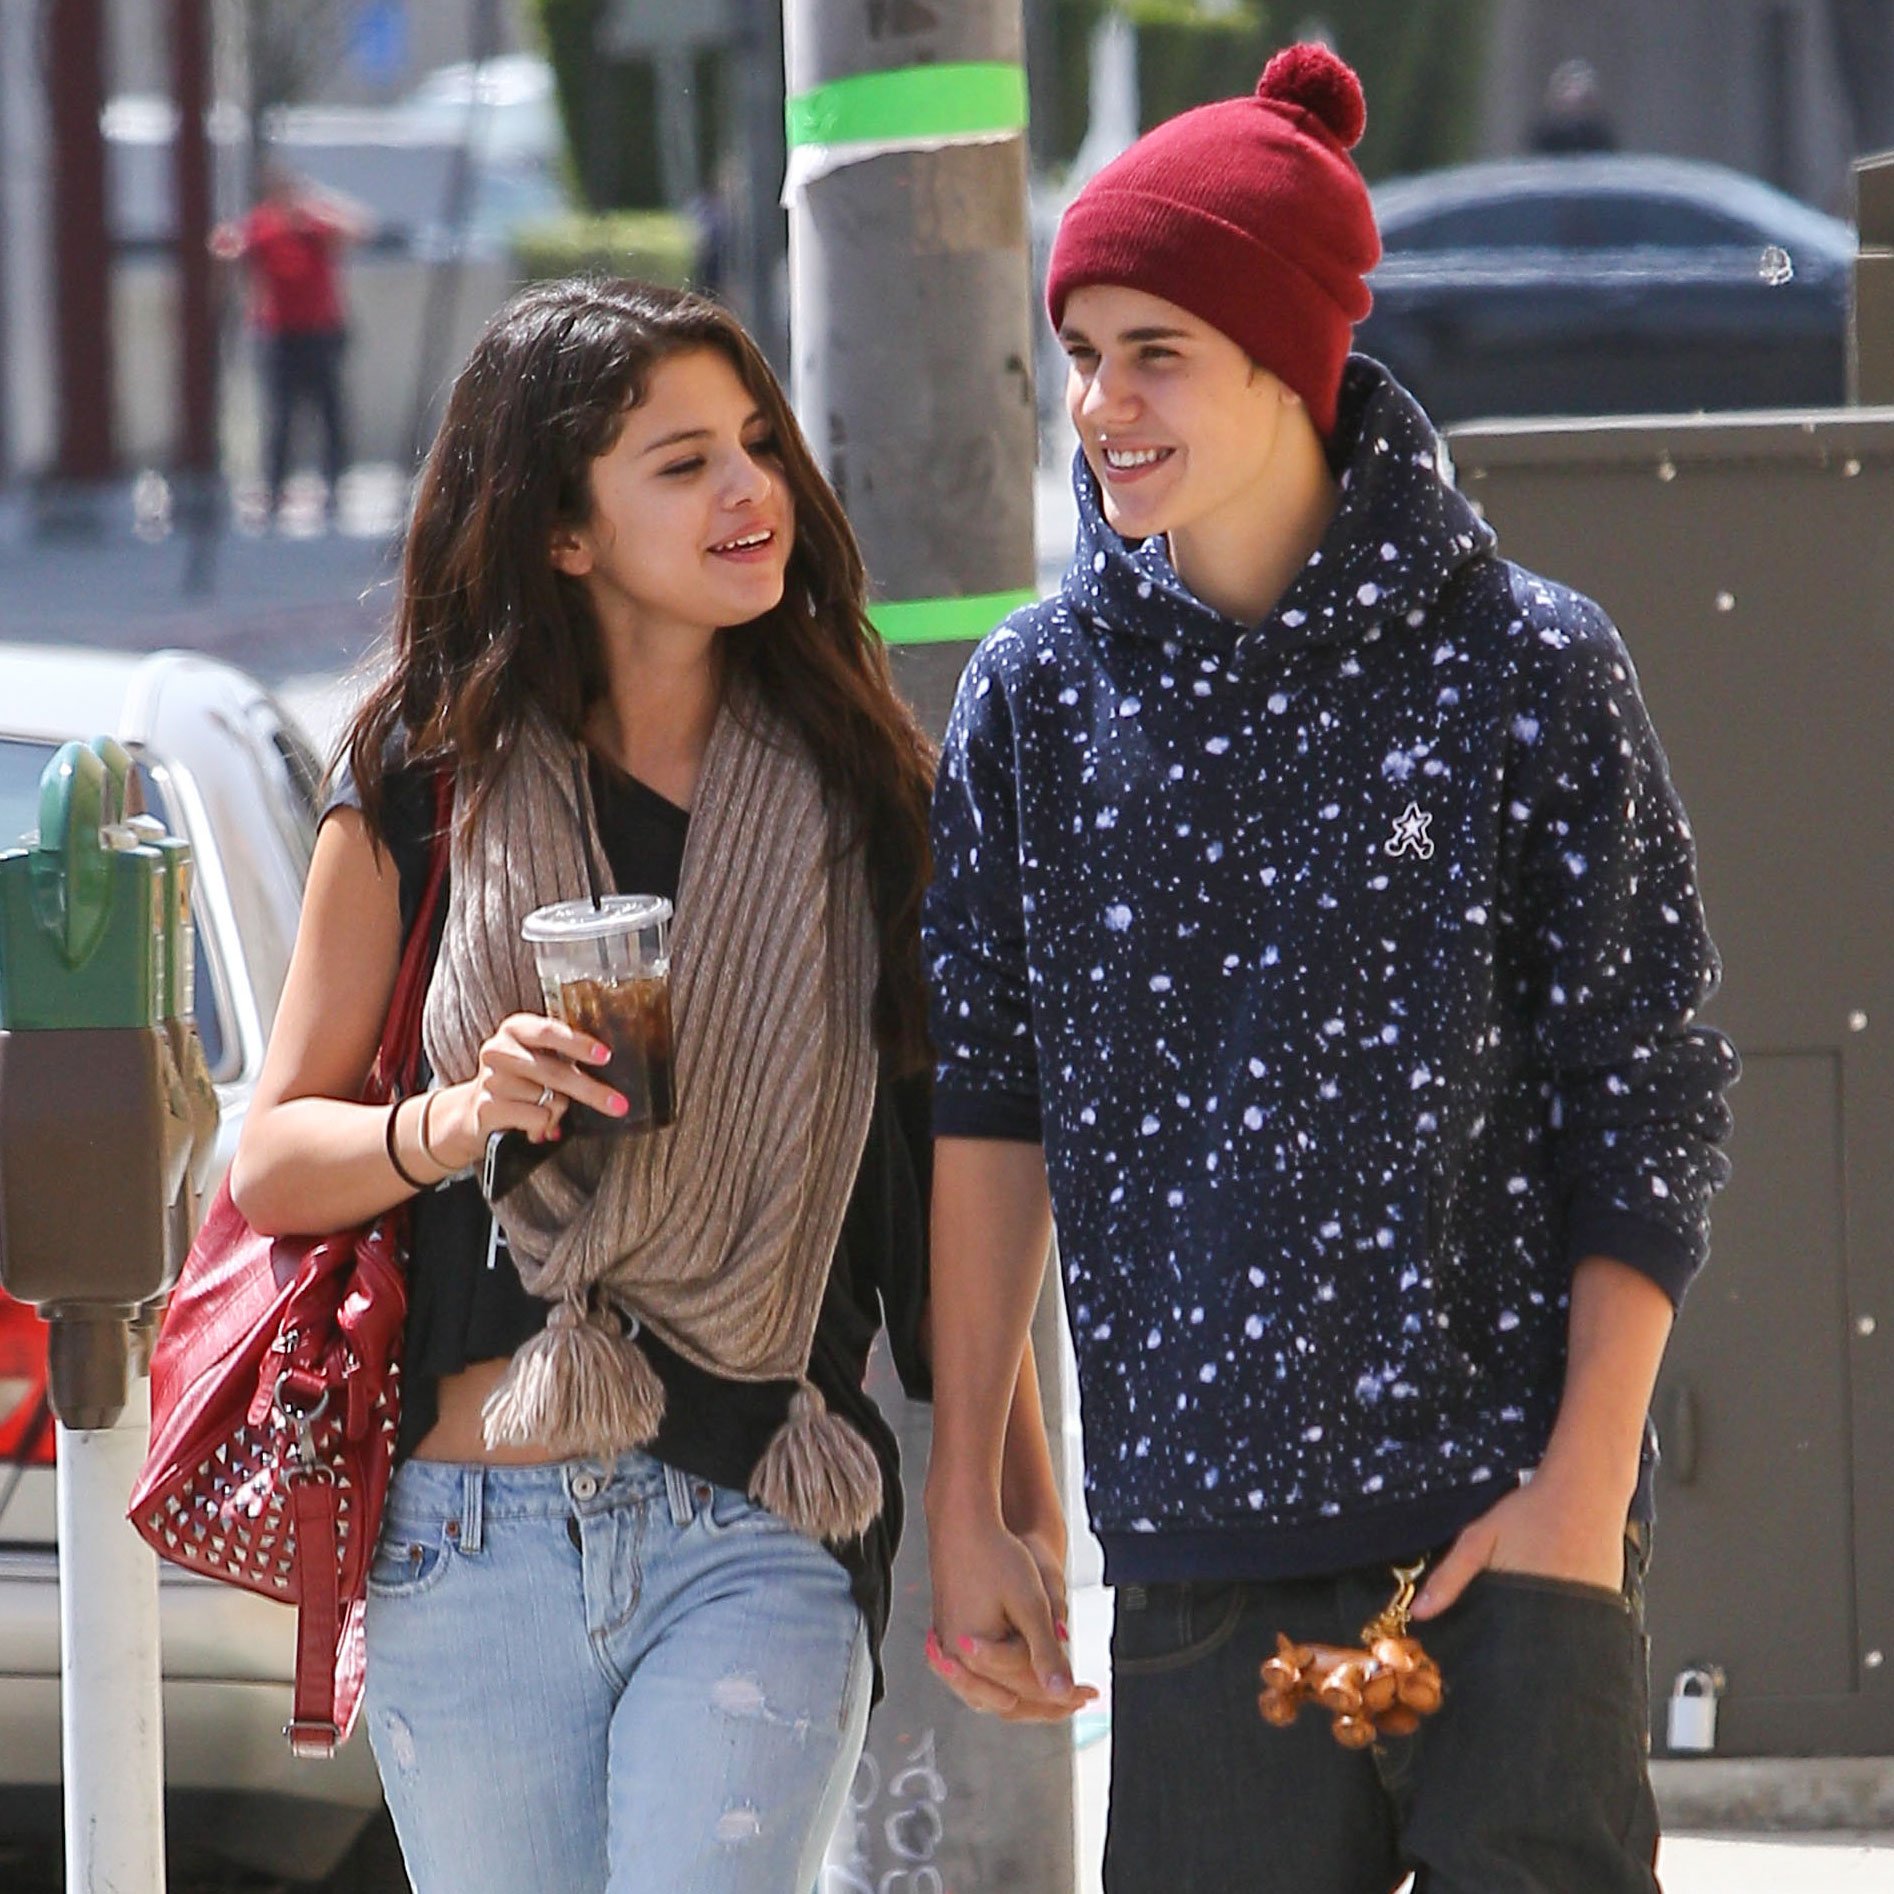 Justin-Bieber-Selena-Gomez-Holding-Hands-Pictures.jpg